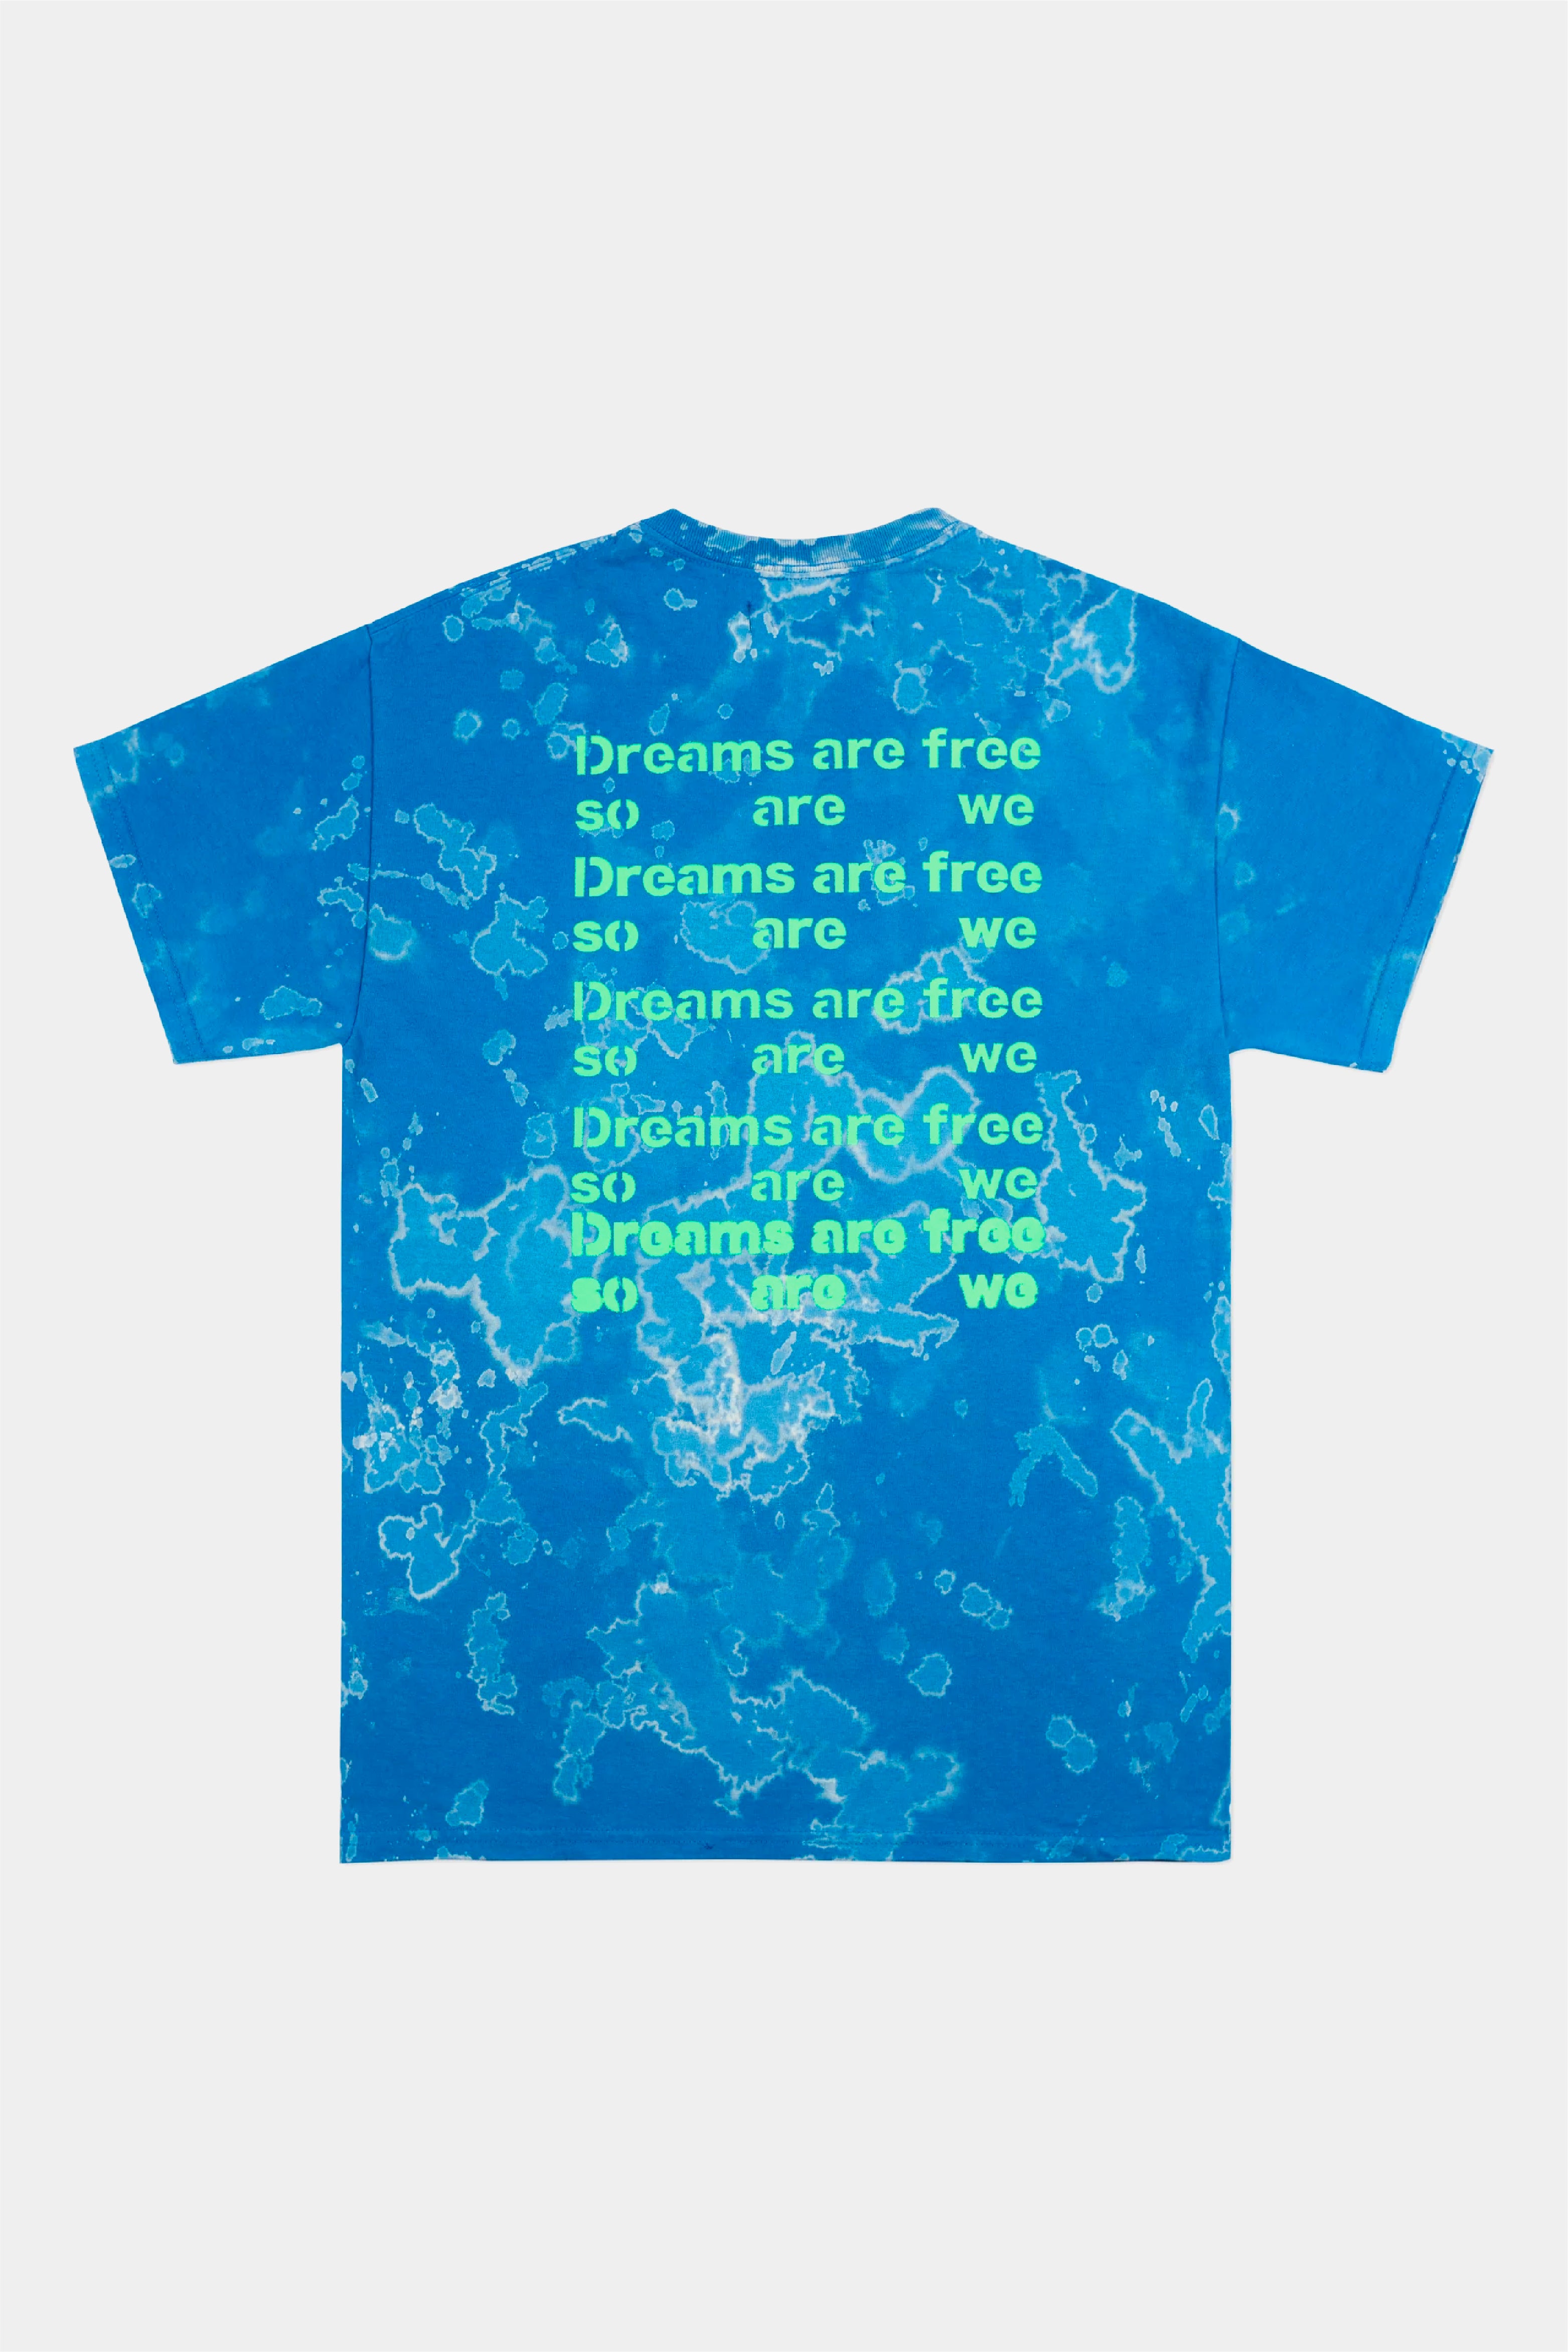 Selectshop FRAME - DREAMLAND SYNDICATE So Free Tee T-Shirts Concept Store Dubai